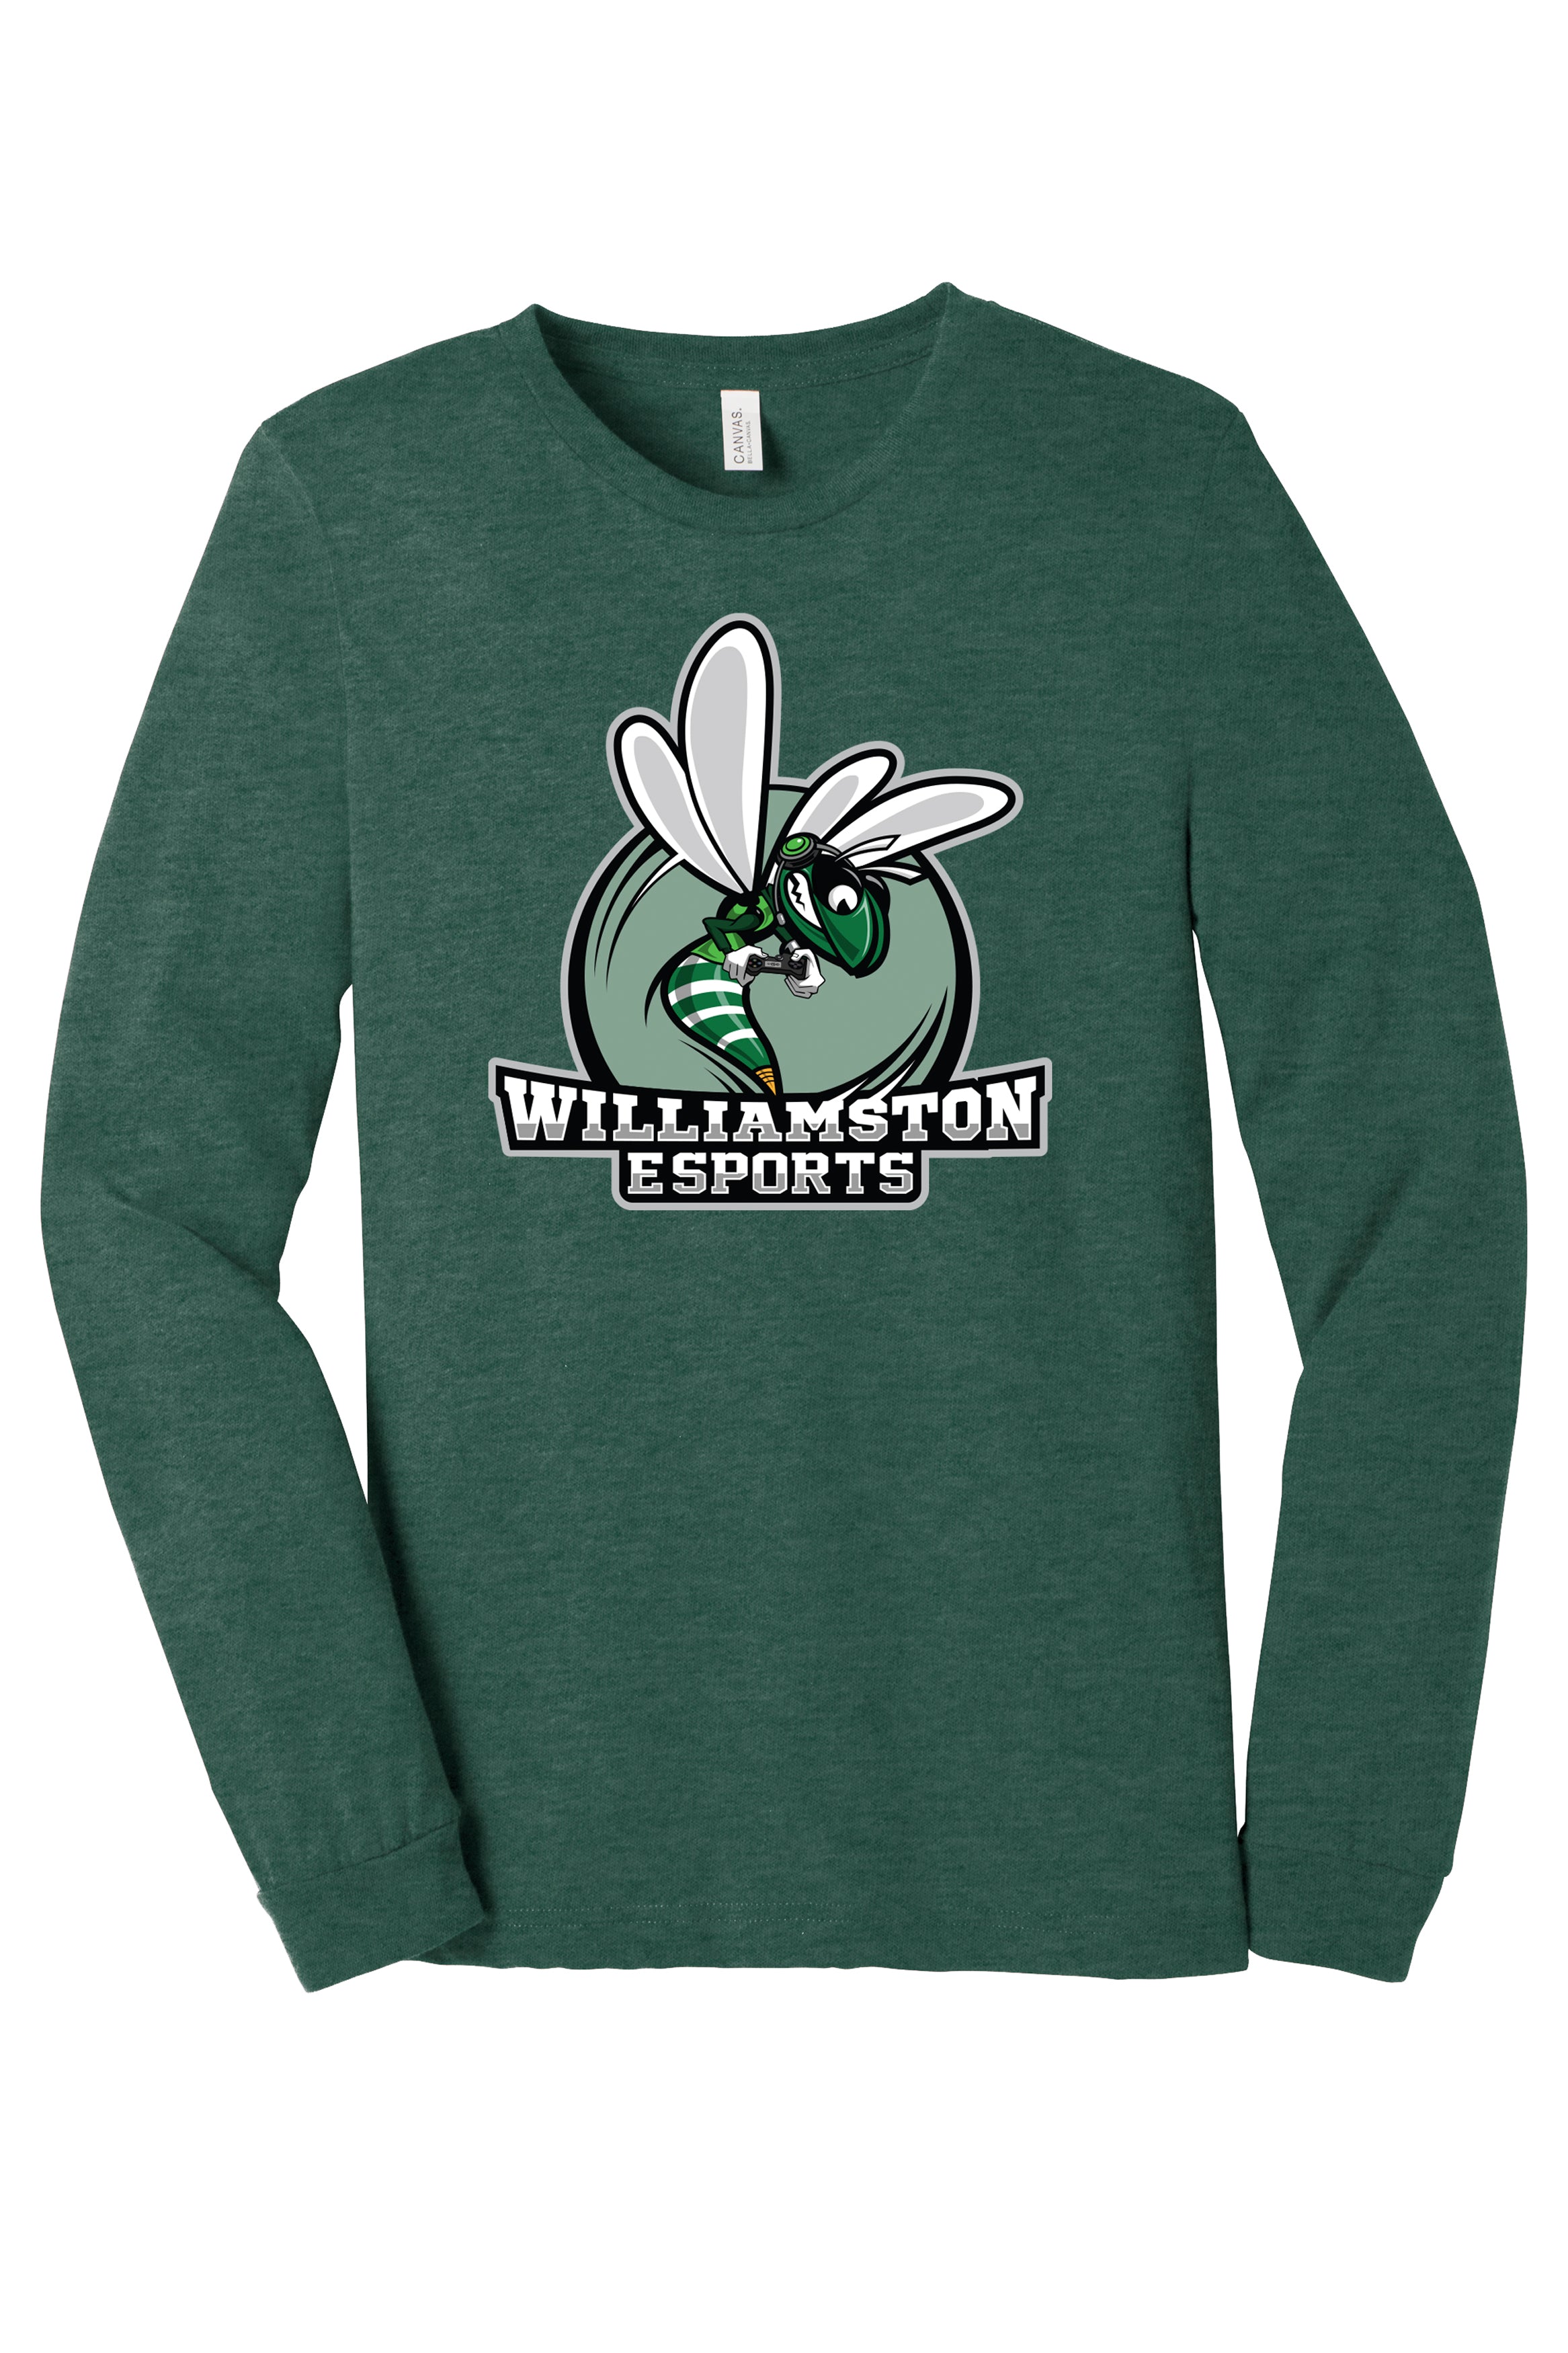 Williamston Esports - Long Sleeve Tee